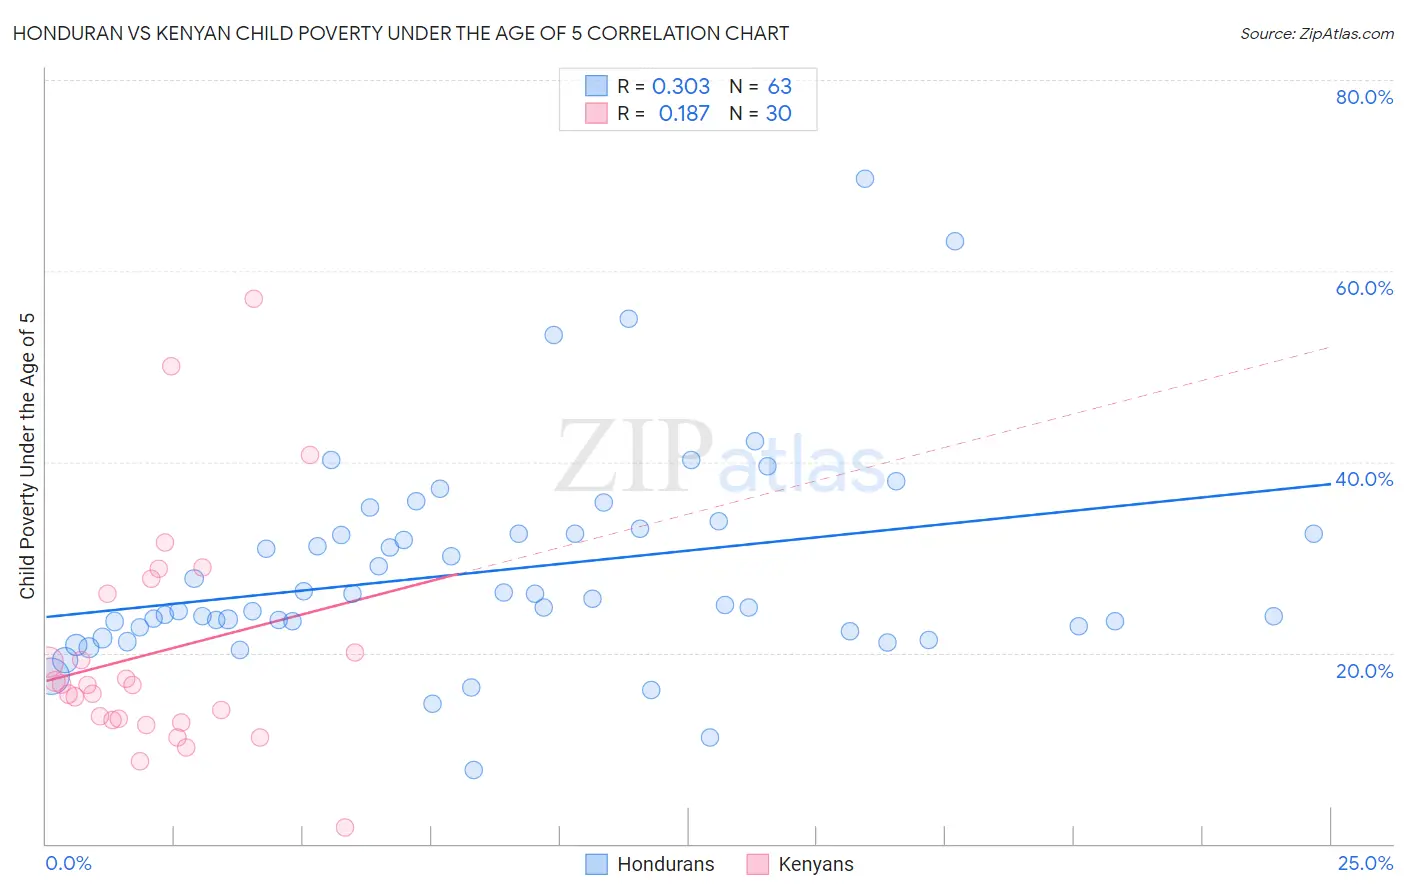 Honduran vs Kenyan Child Poverty Under the Age of 5